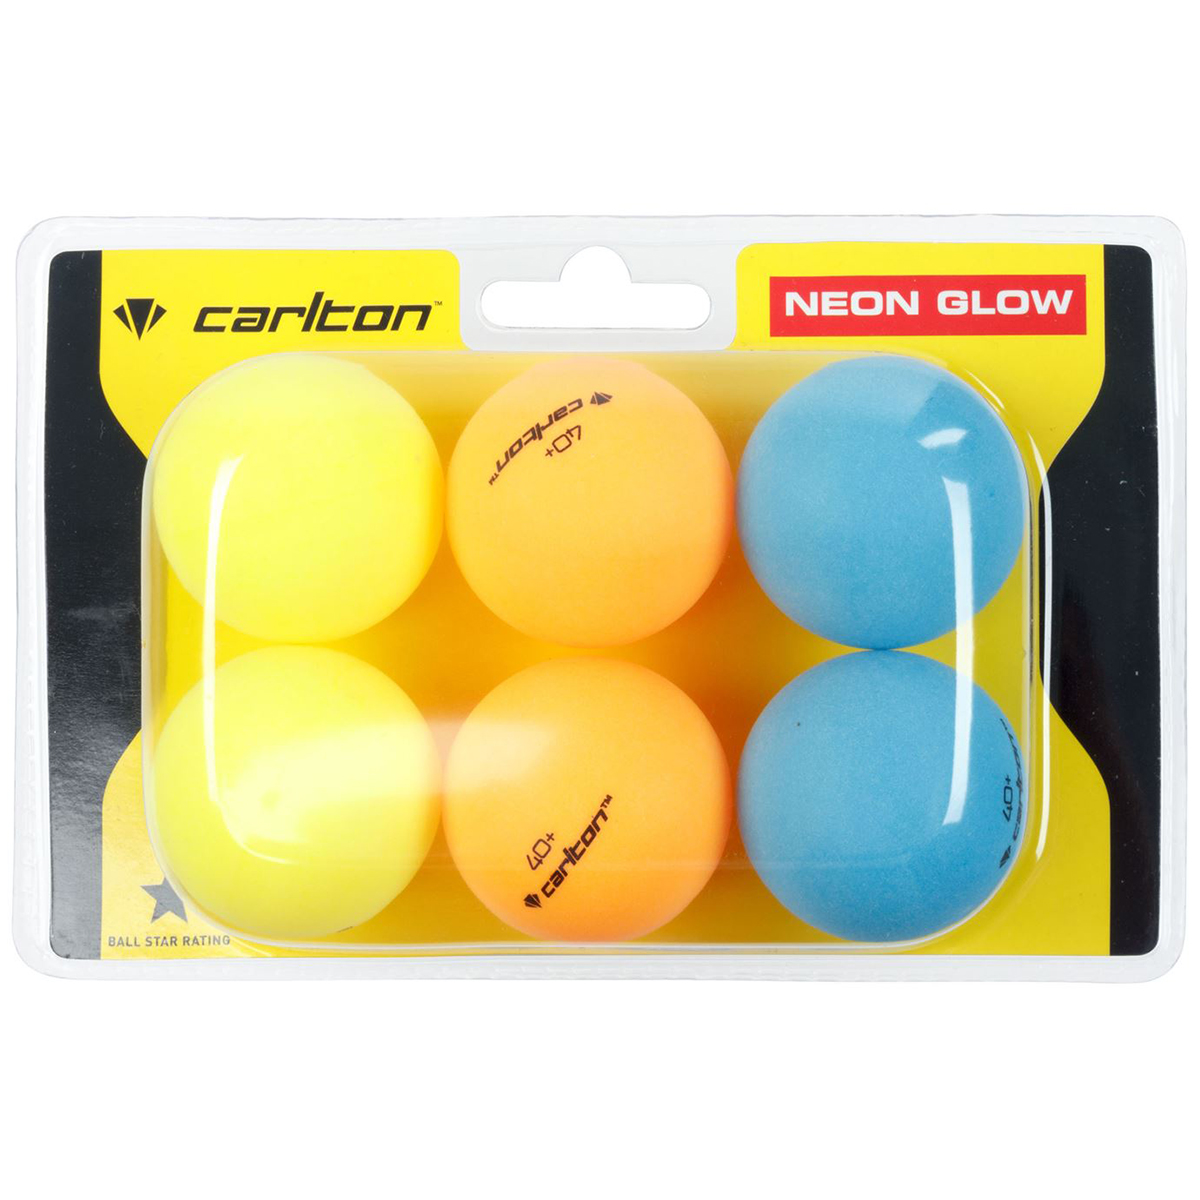 Carlton Neon Glow Table Tennis Balls, 6-Pack